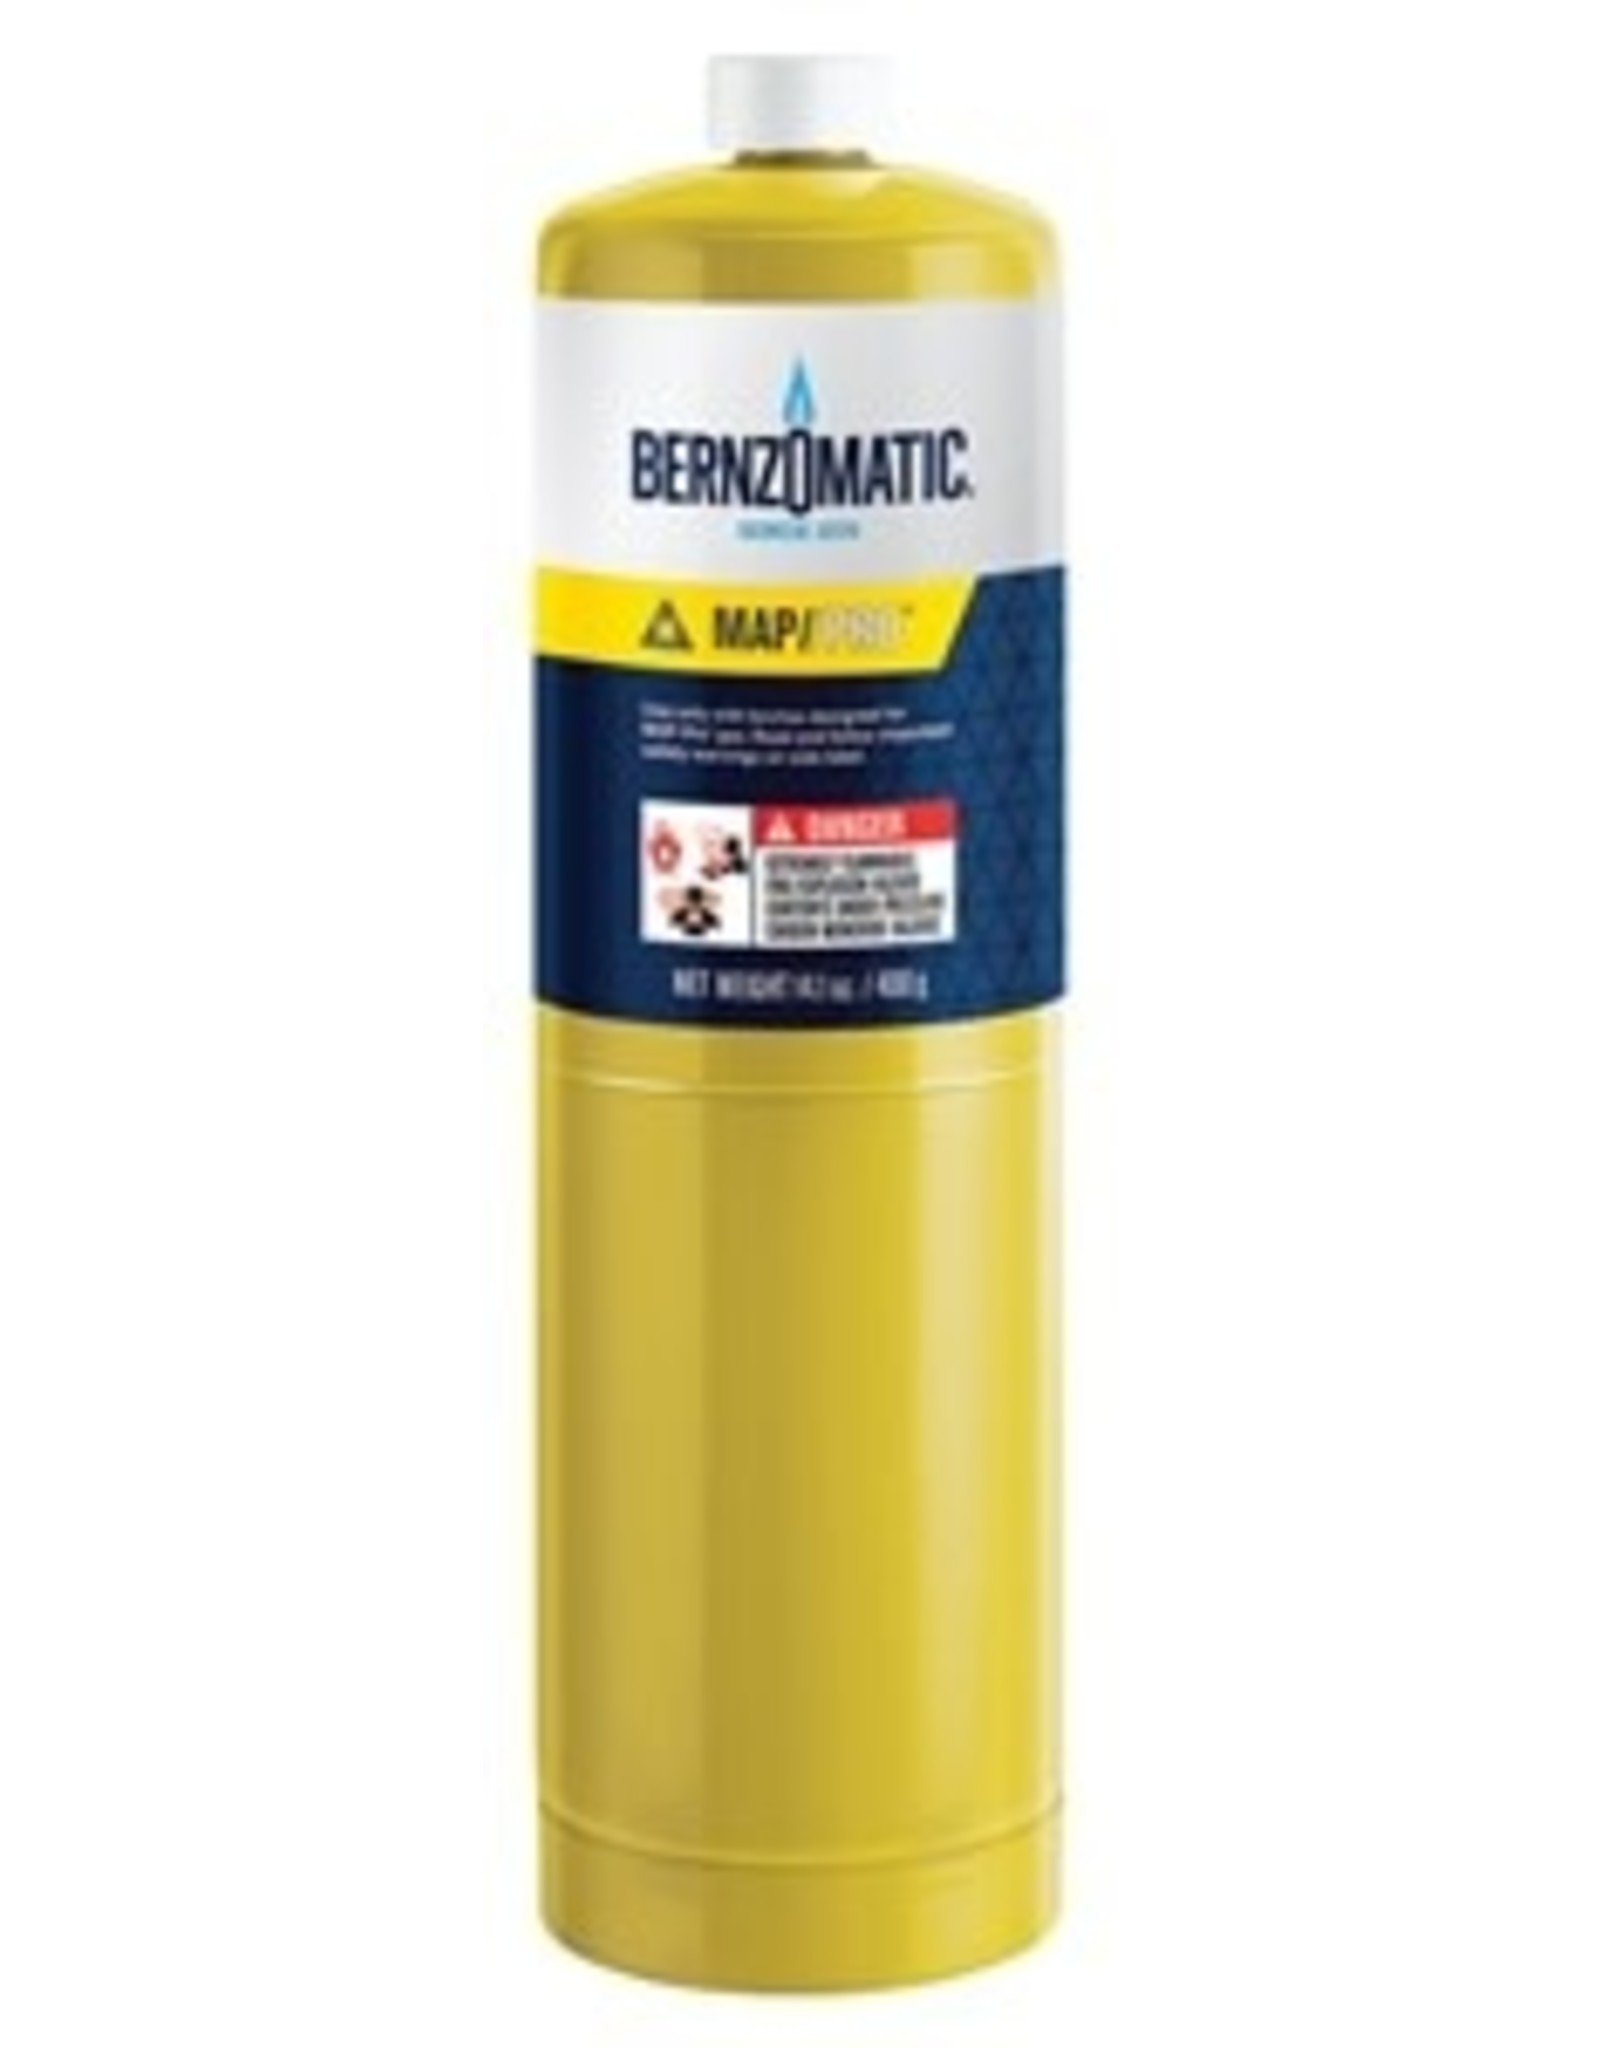 Bernzomatic BernzOmatic MAP-PRO 332477 Hand Torch Cylinder, MAPP Gas, 14.1 oz